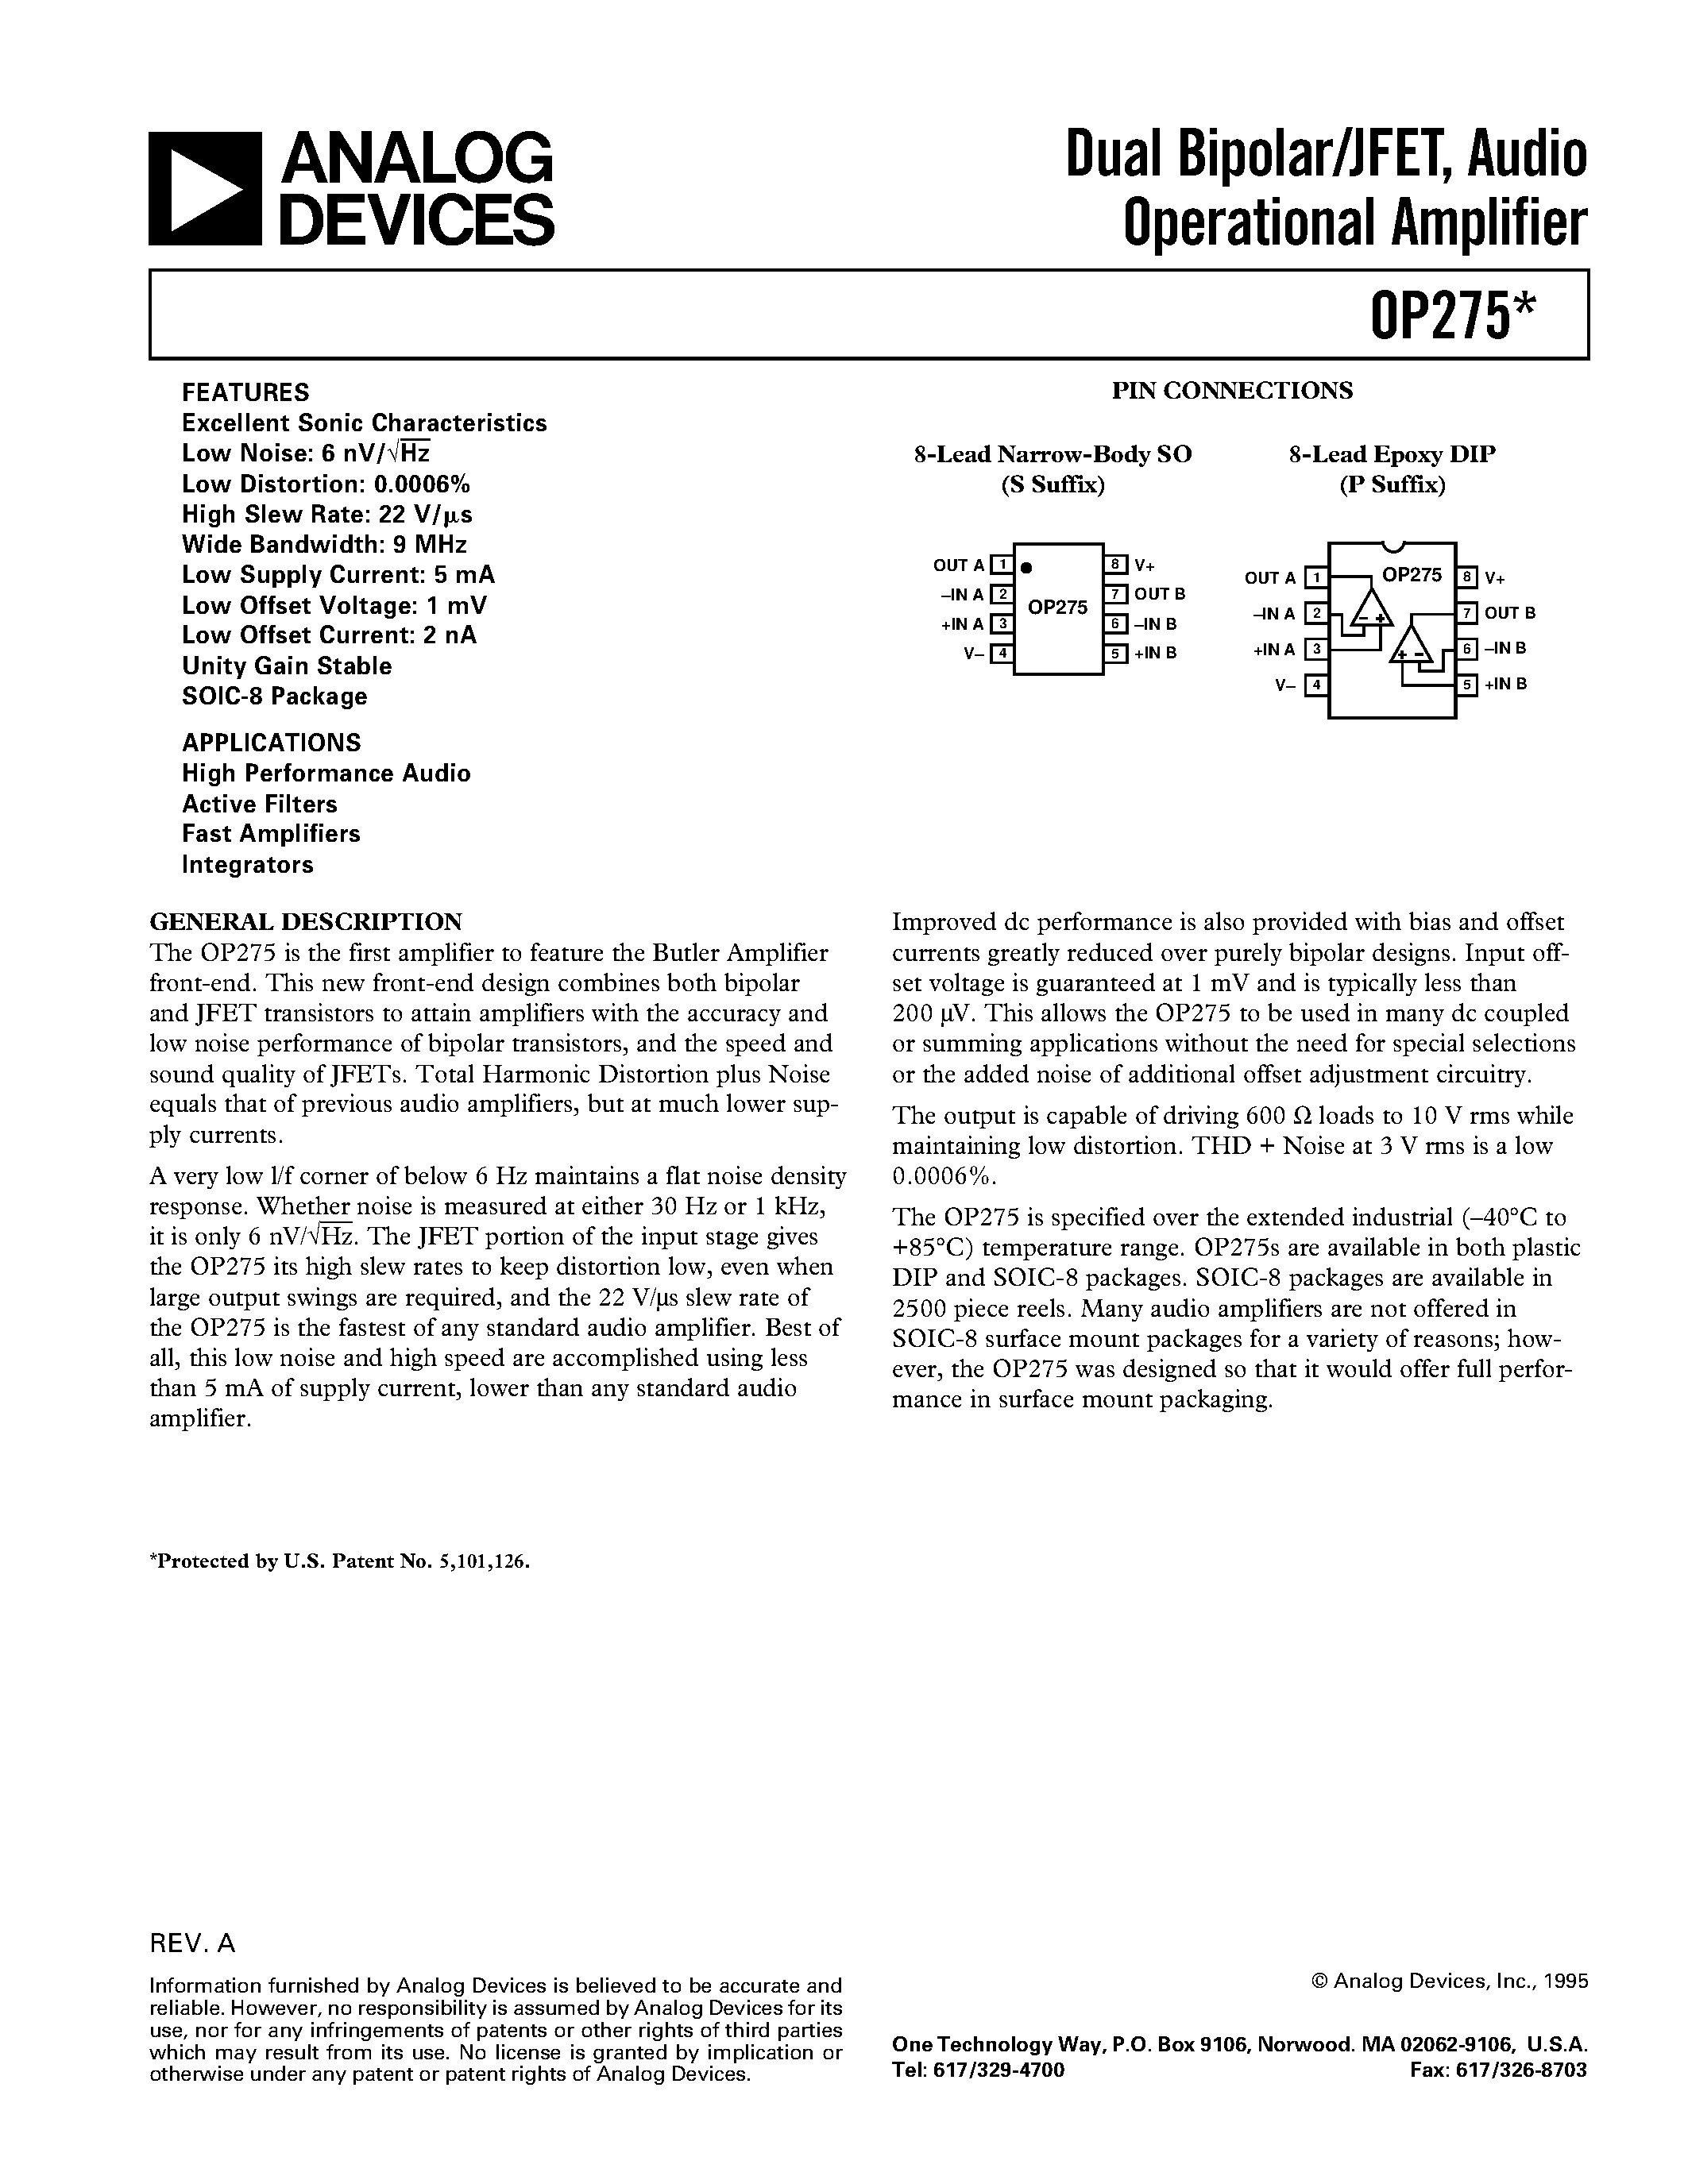 Даташит OP275 - Dual Bipolar/JFET / Audio Operational Amplifier страница 1